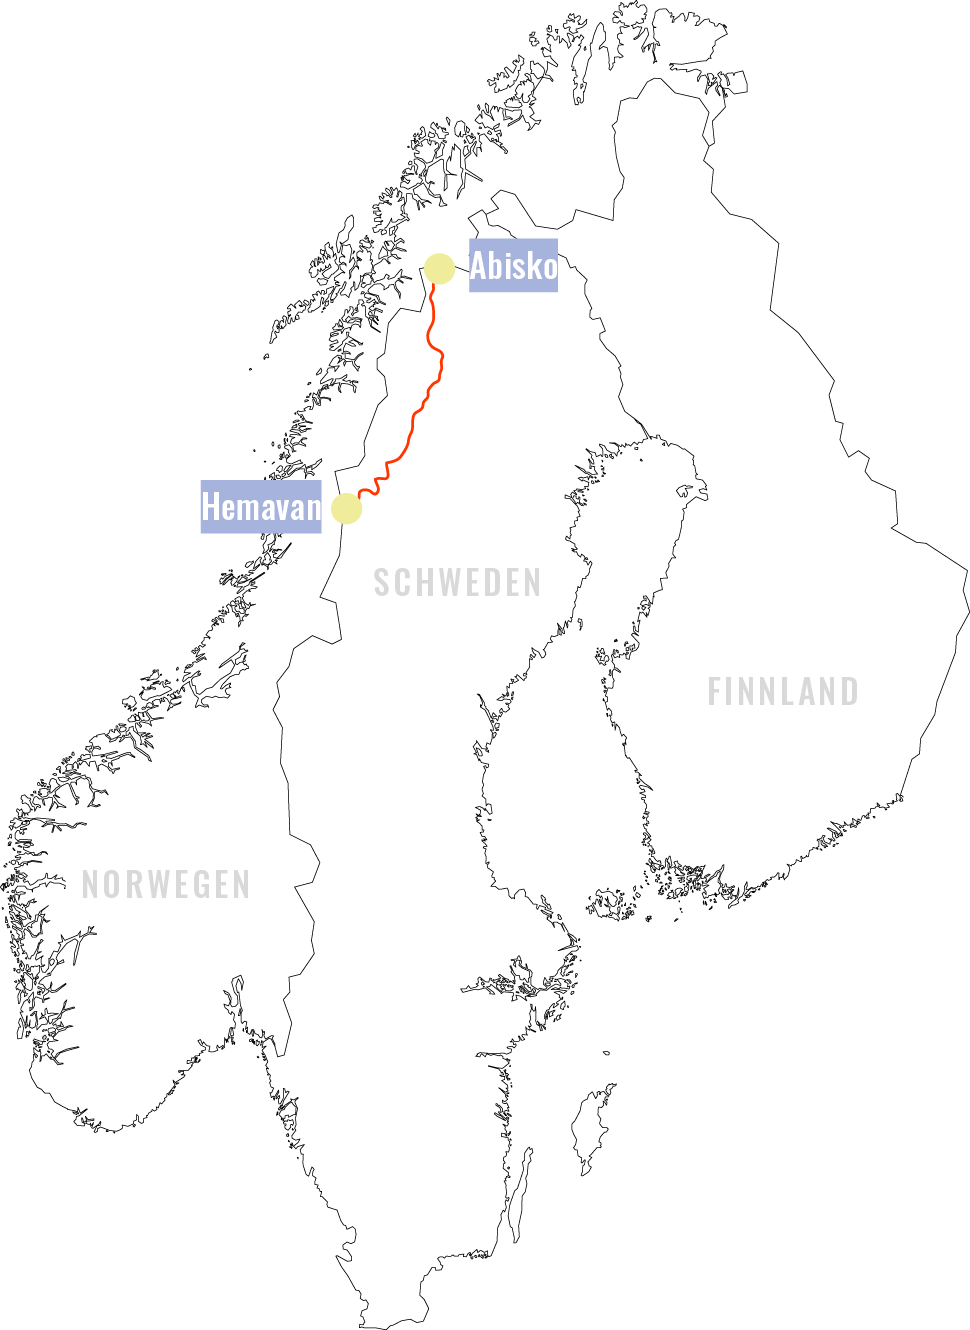 Kungsleden Route